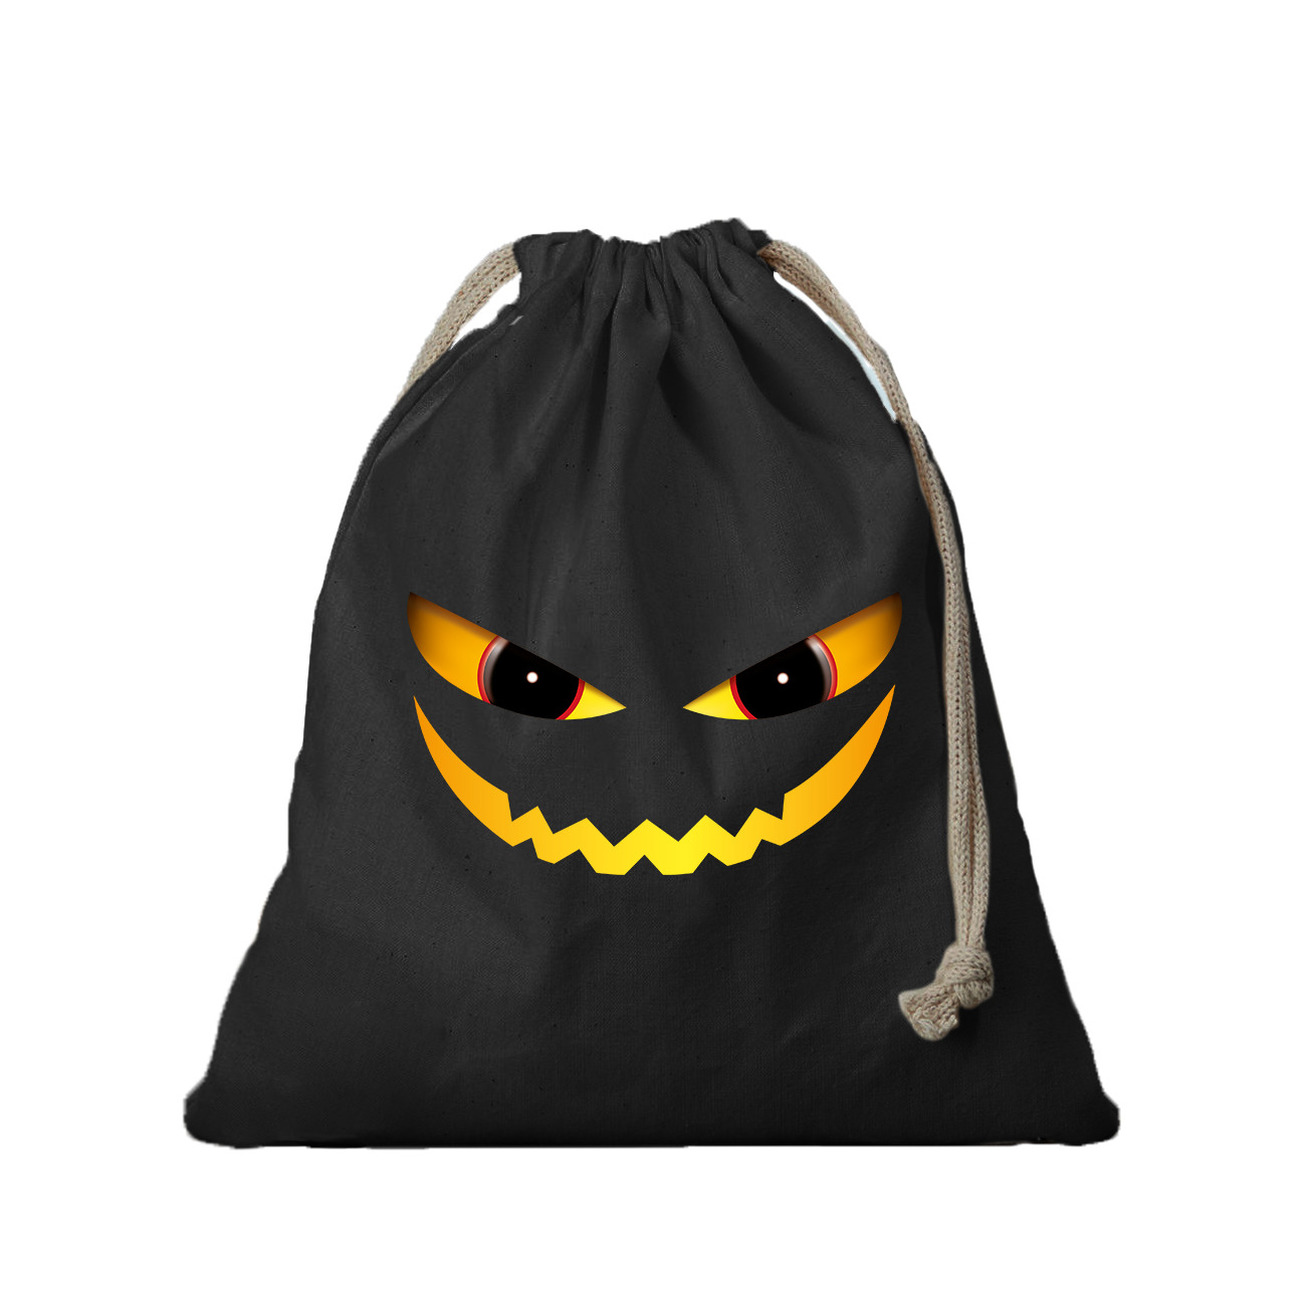 2x Duivel gezicht halloween canvas snoep tasje/ snoepzakje zwart met koord 25 x 30 cm